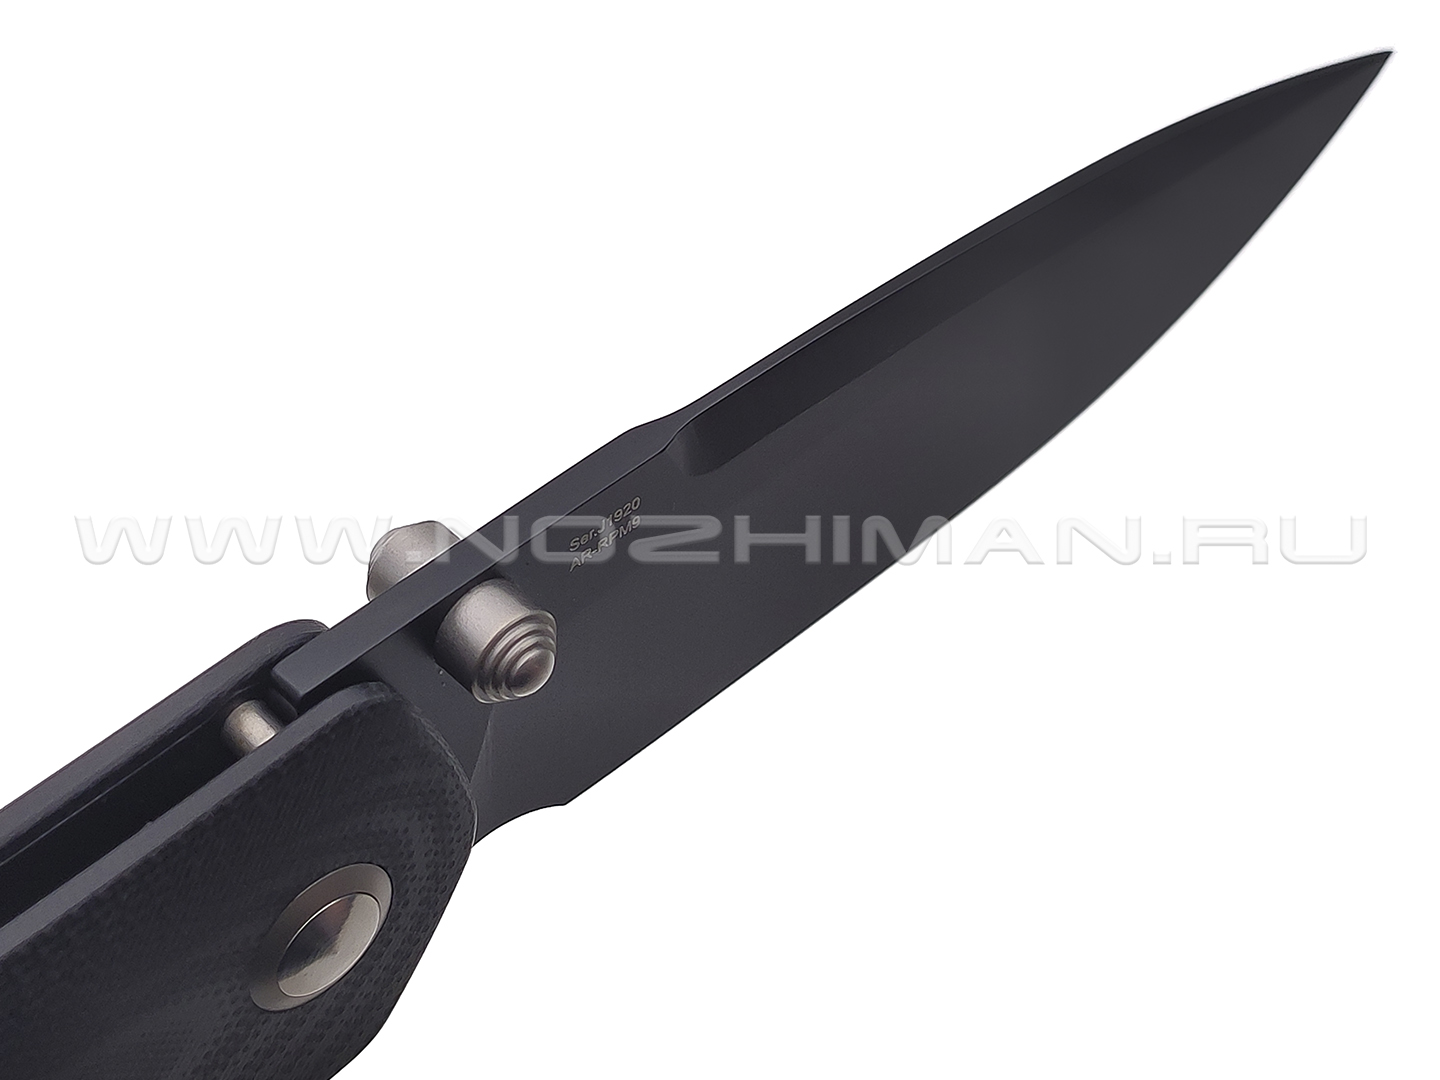 Нож CJRB Scoria J1920-BBK сталь AR-RPM9 PVD, рукоять G10 black